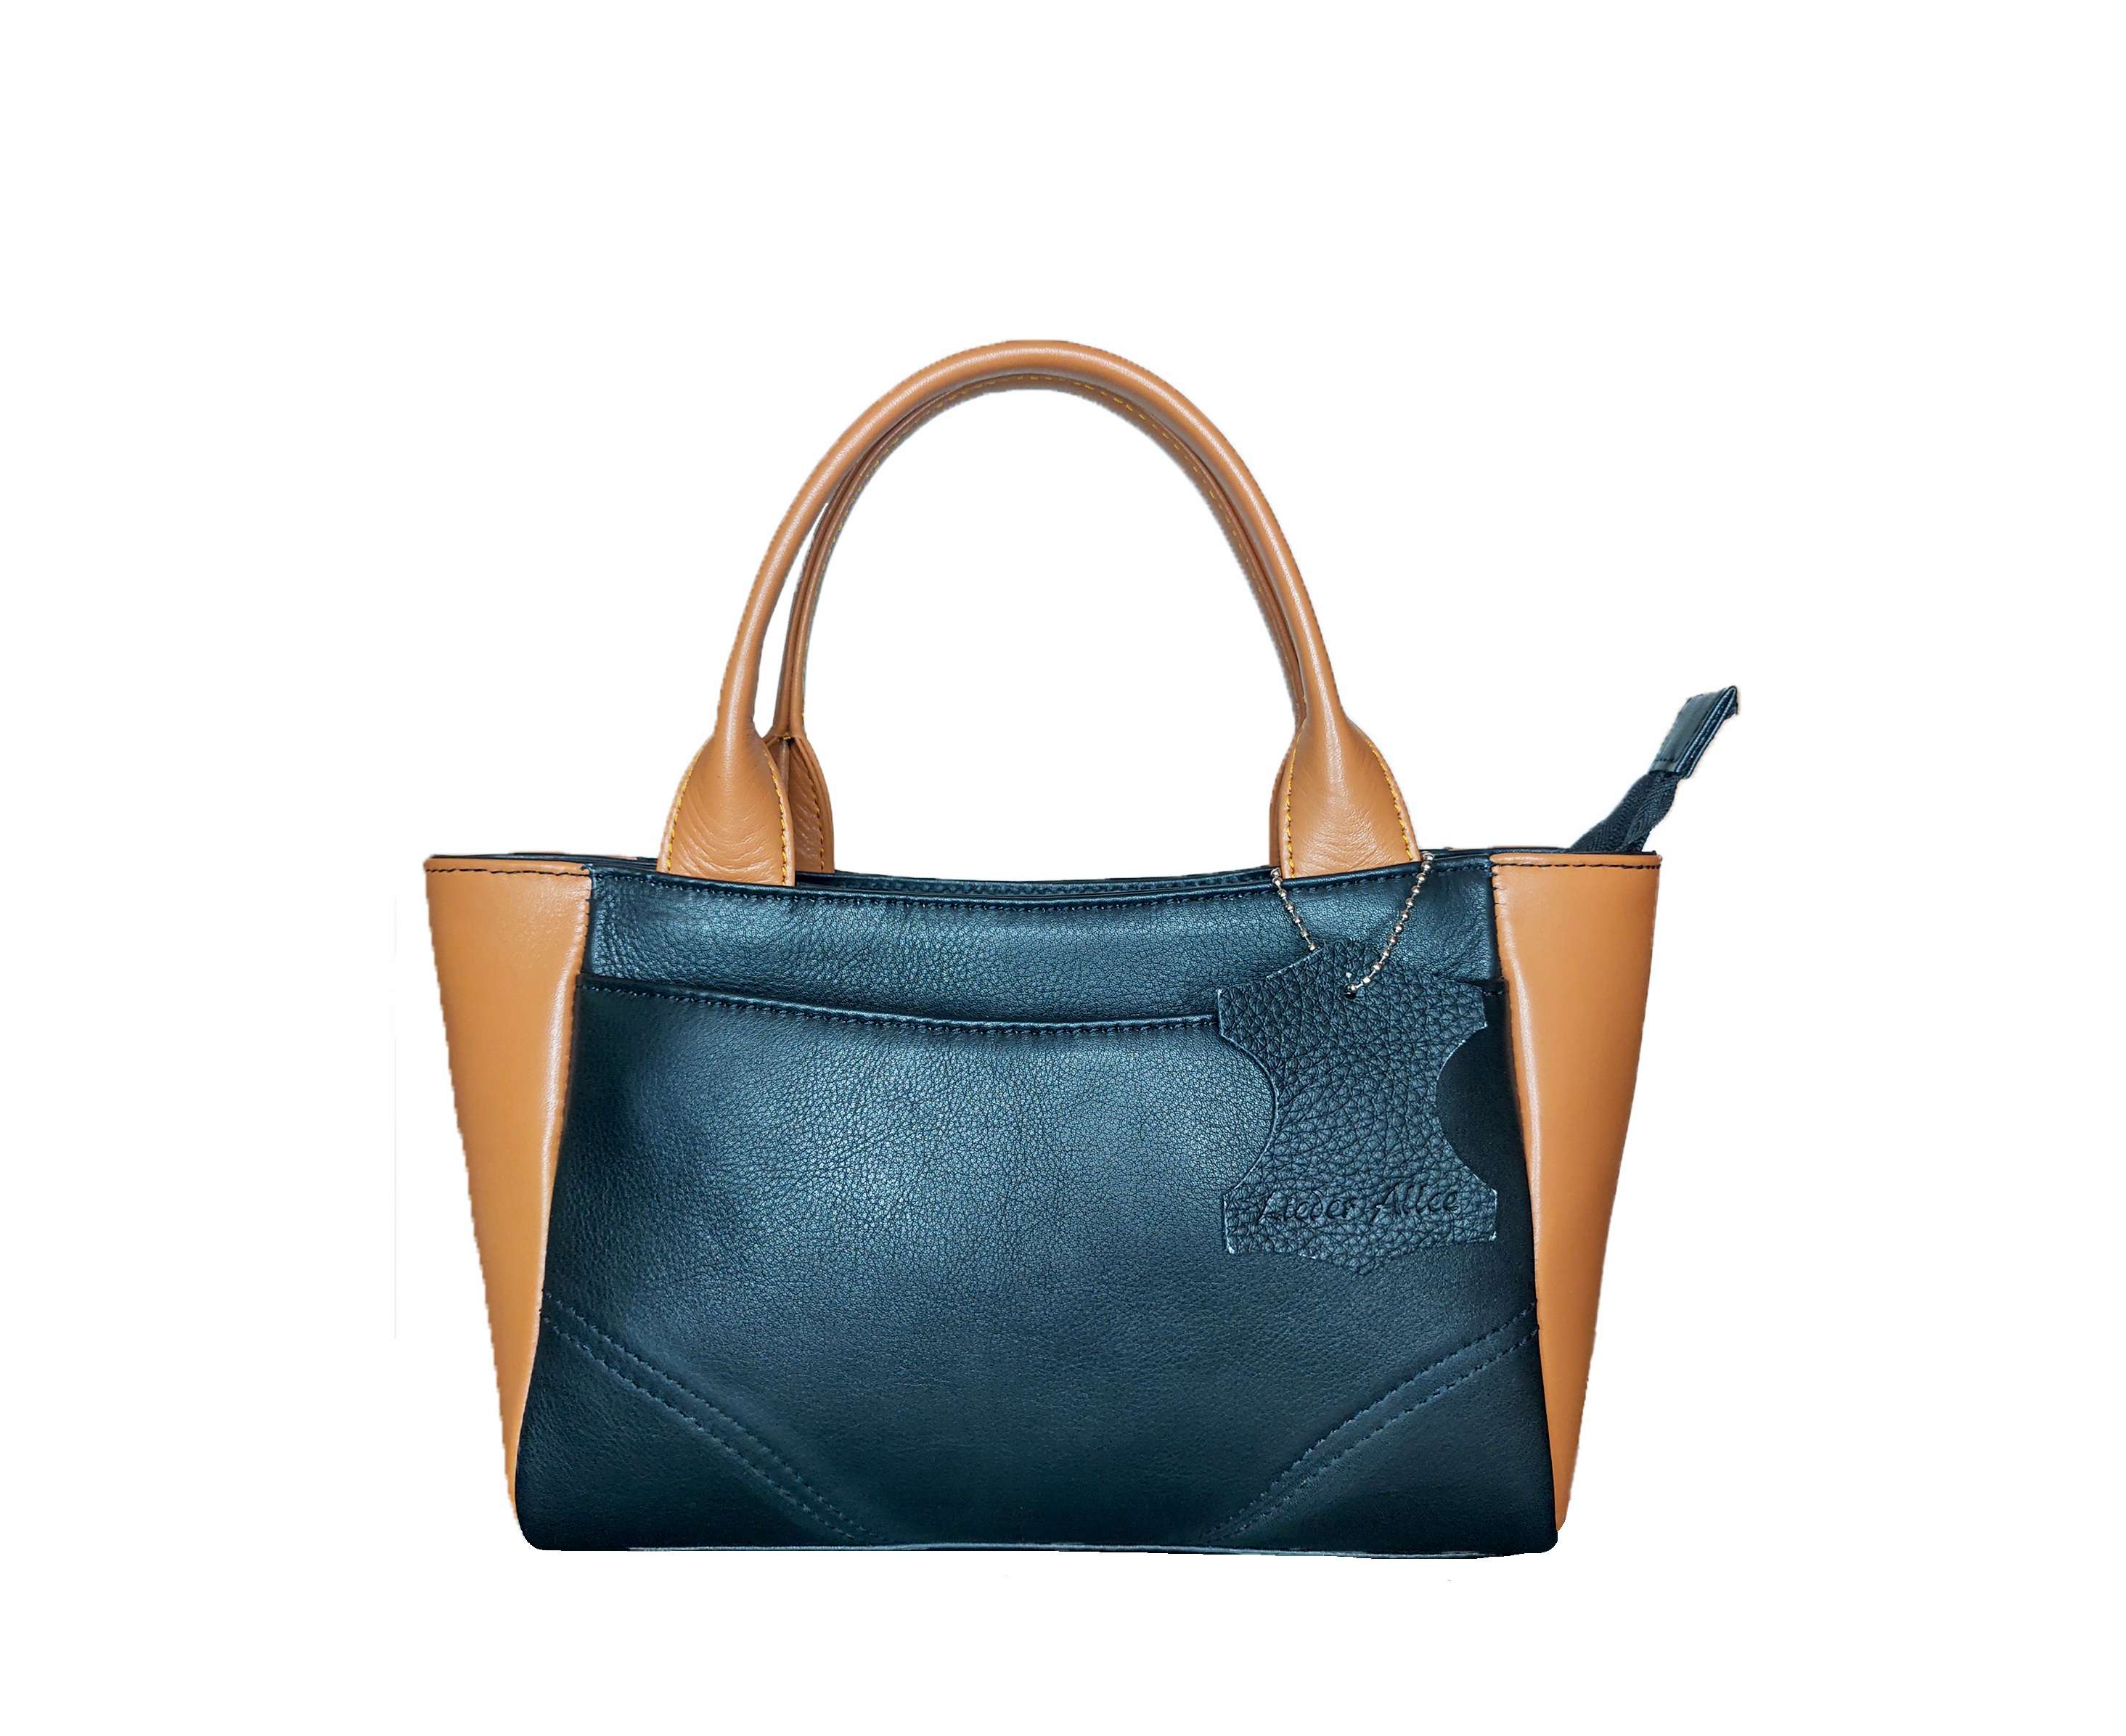 New W Tag Elcante Accessories: Hollywood Movie Film Model Featured Handbag/ Purse | eBay